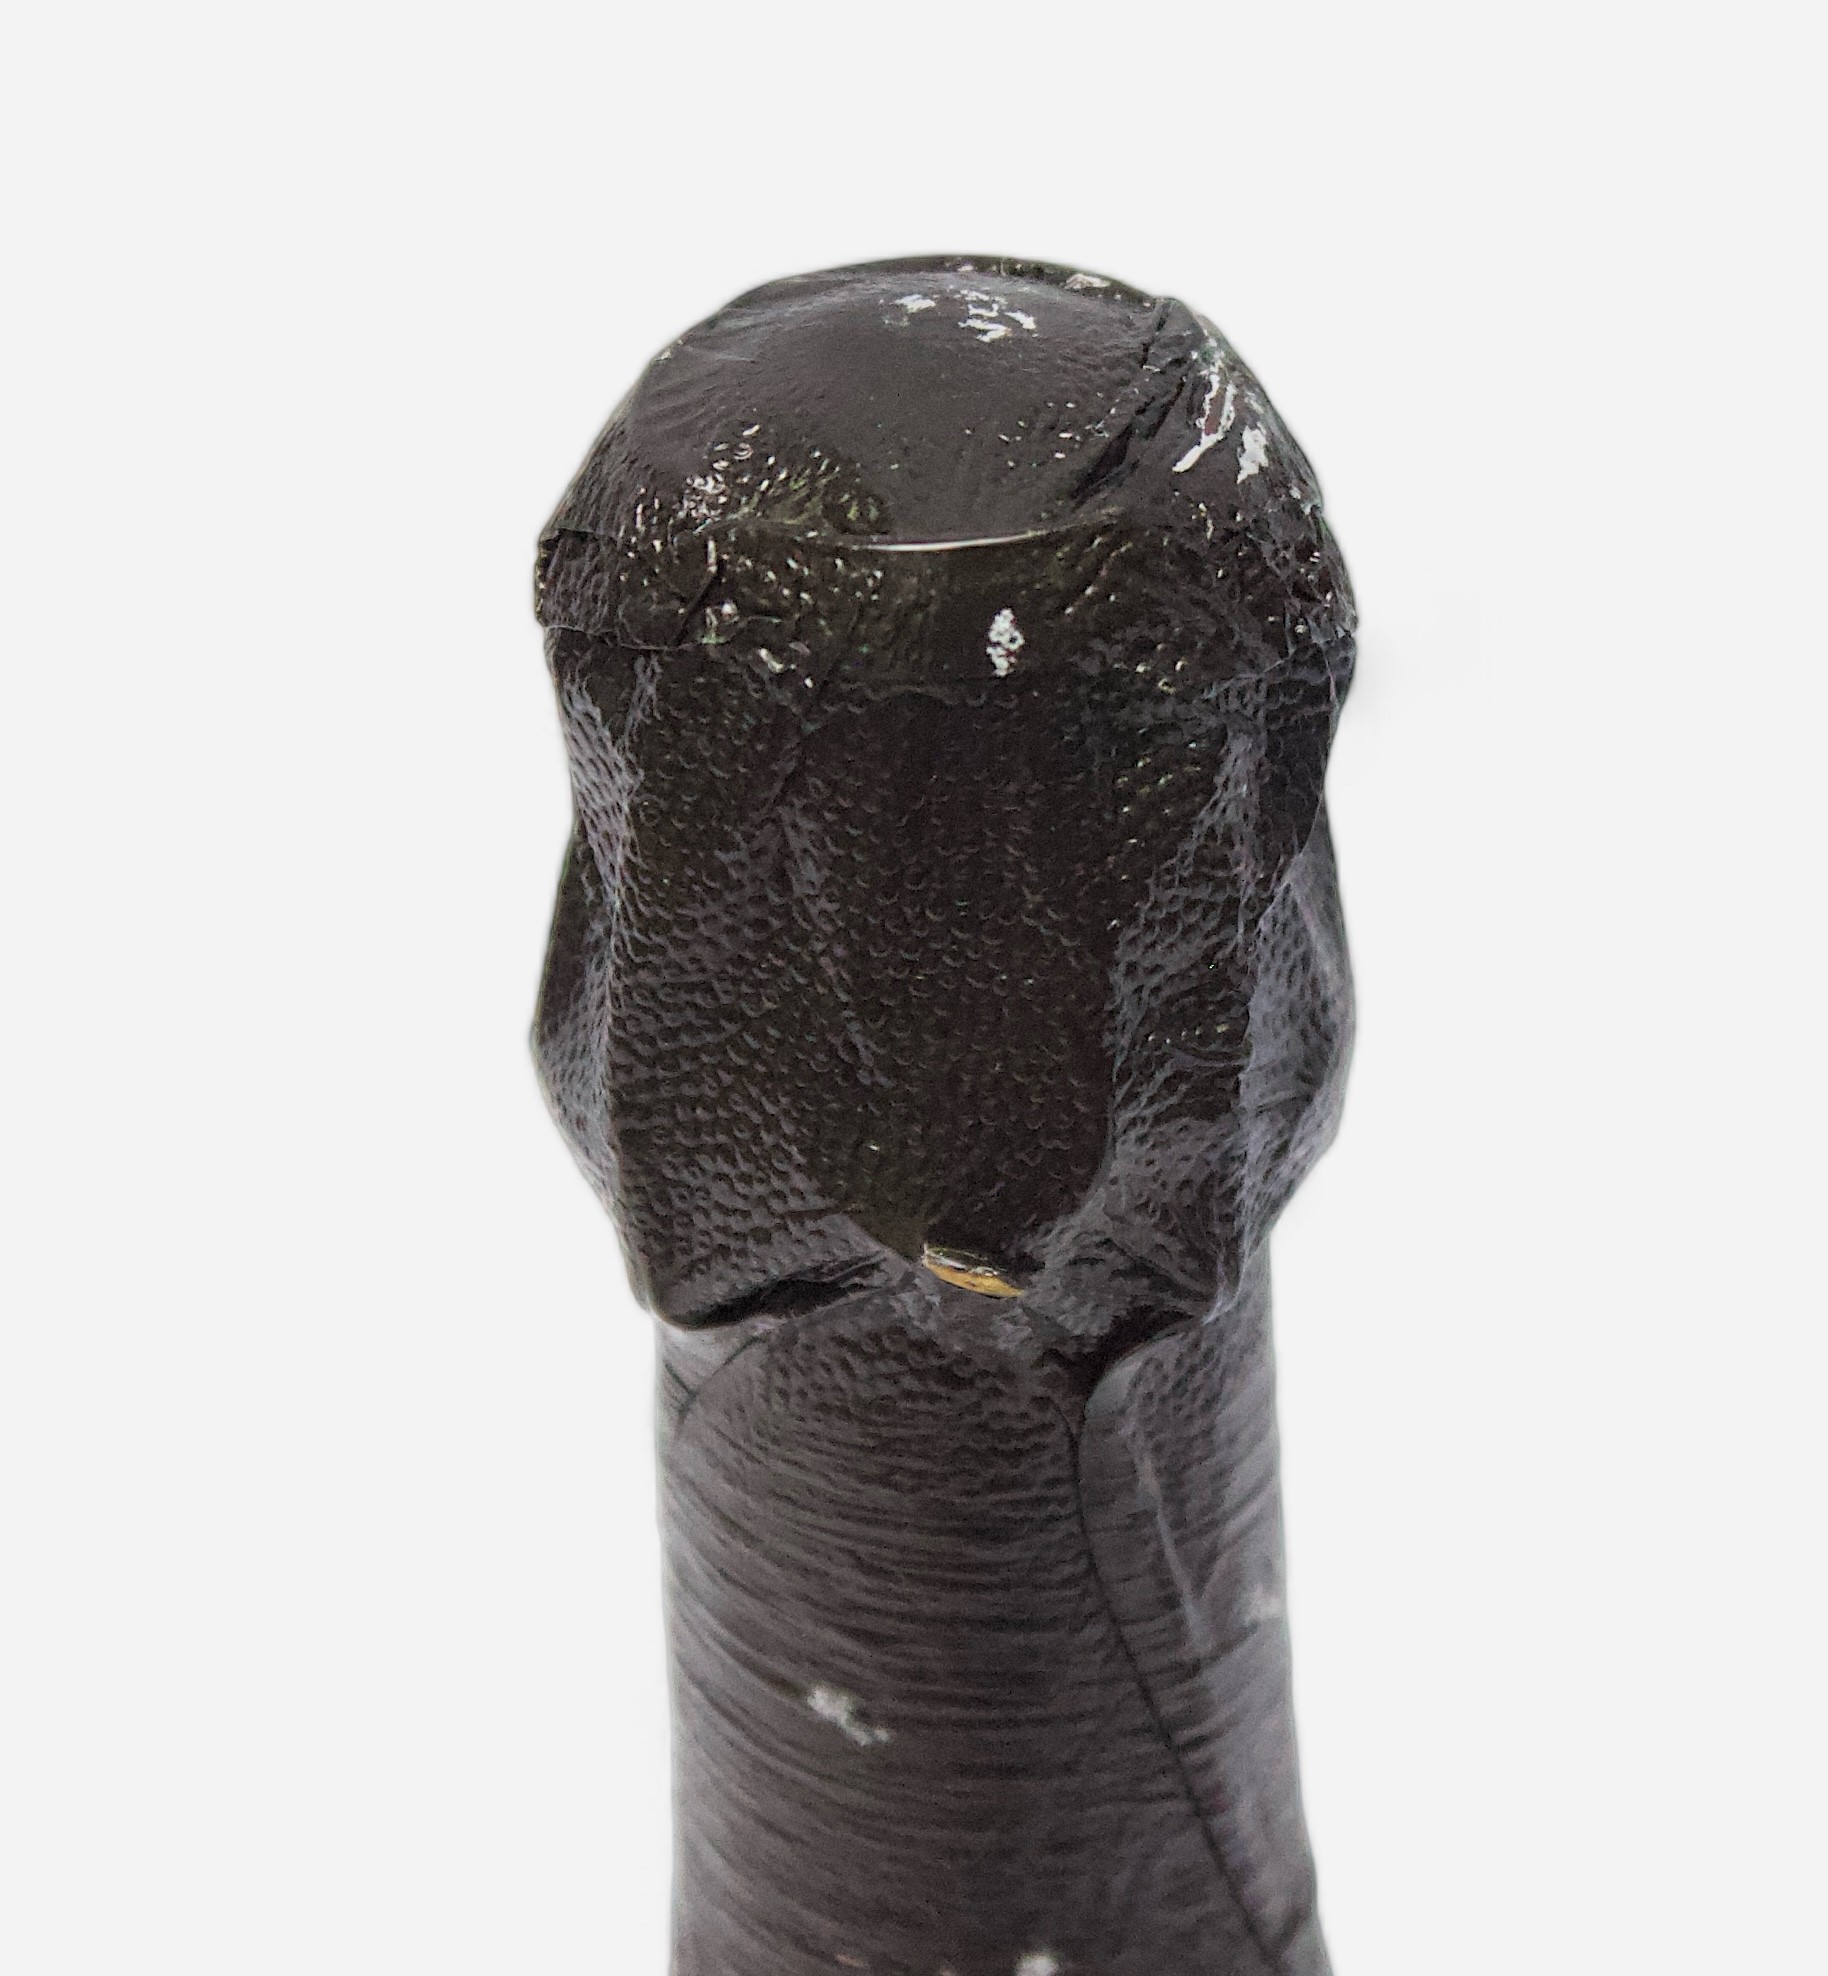 A bottle of Dom Perignon, Moët et Chandon, 1996 Vintage Champagne, 75cl, 12.5% vol, housed in - Image 2 of 2